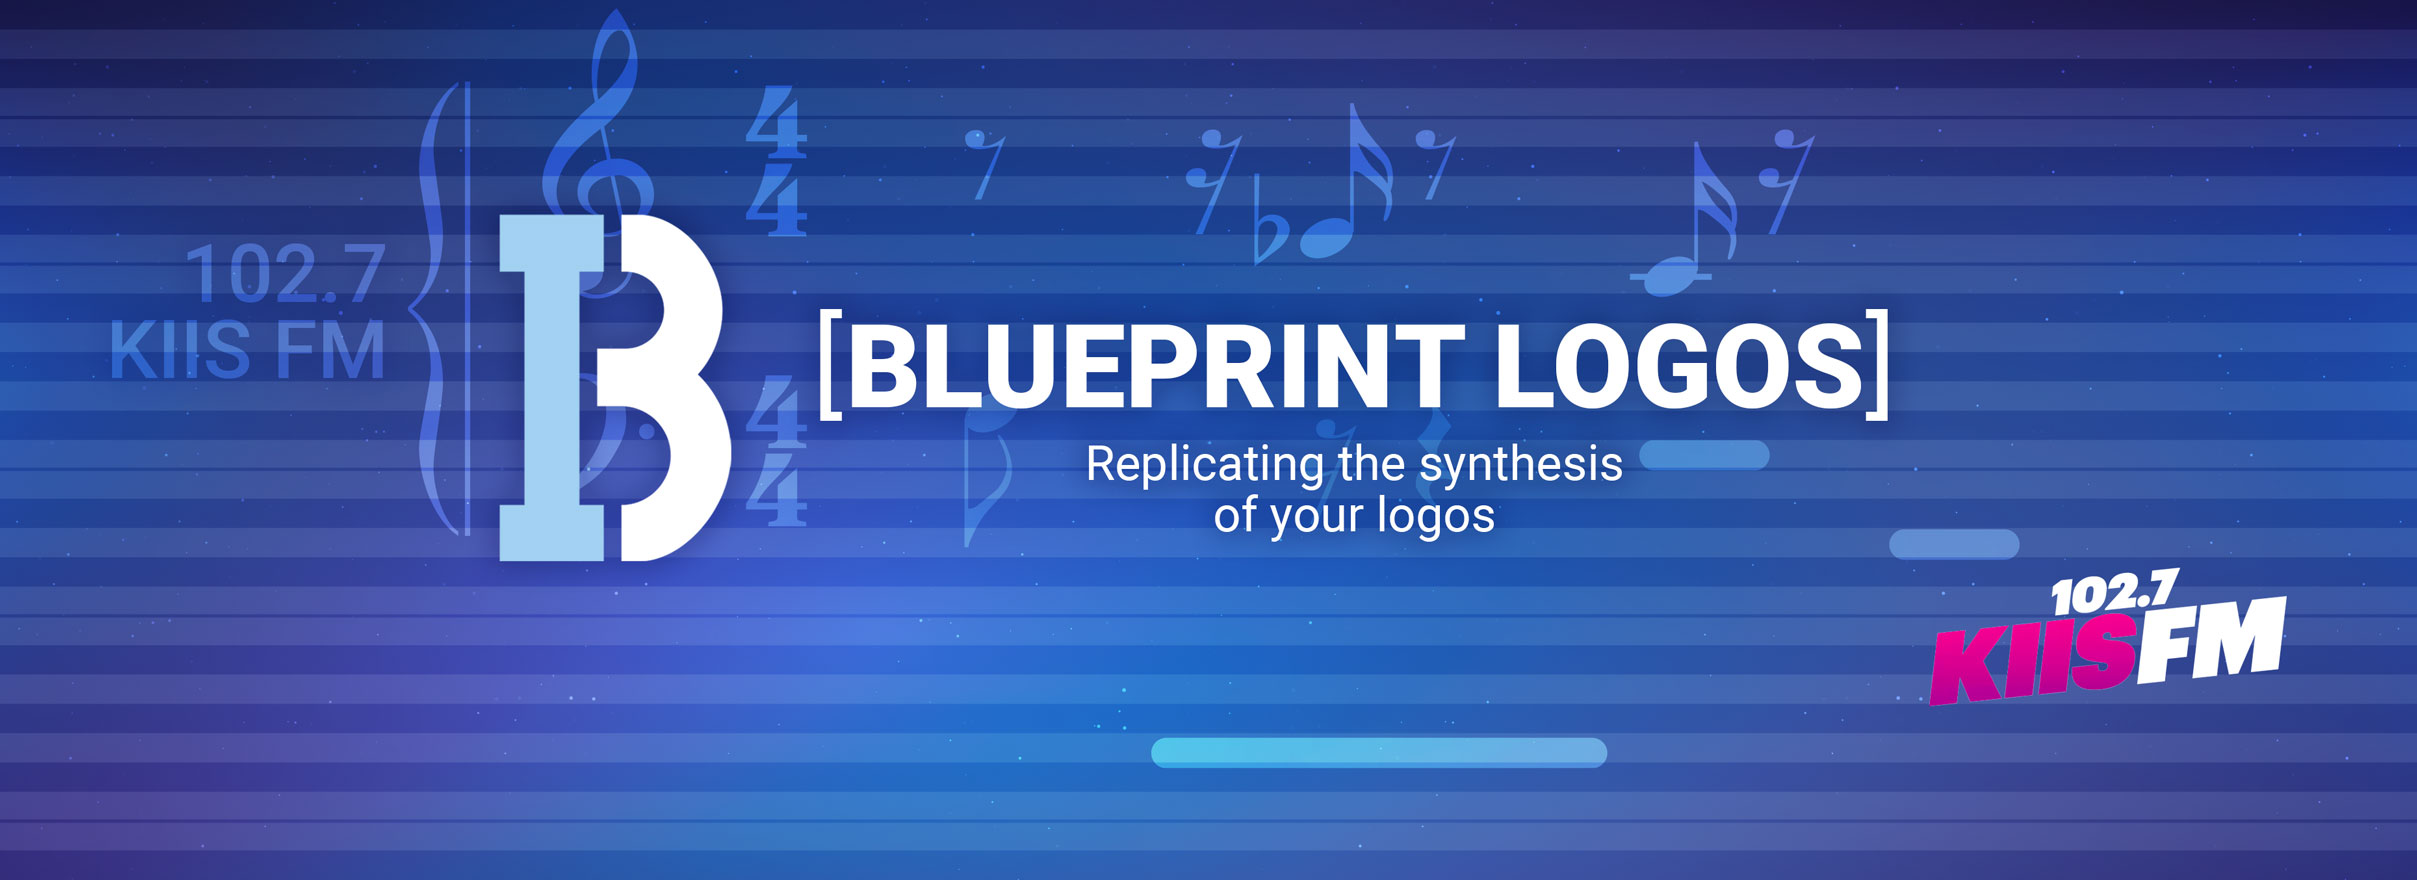 Blueprint Logos: Replicating the synthesis of your logos - 102.7 KIIS FM